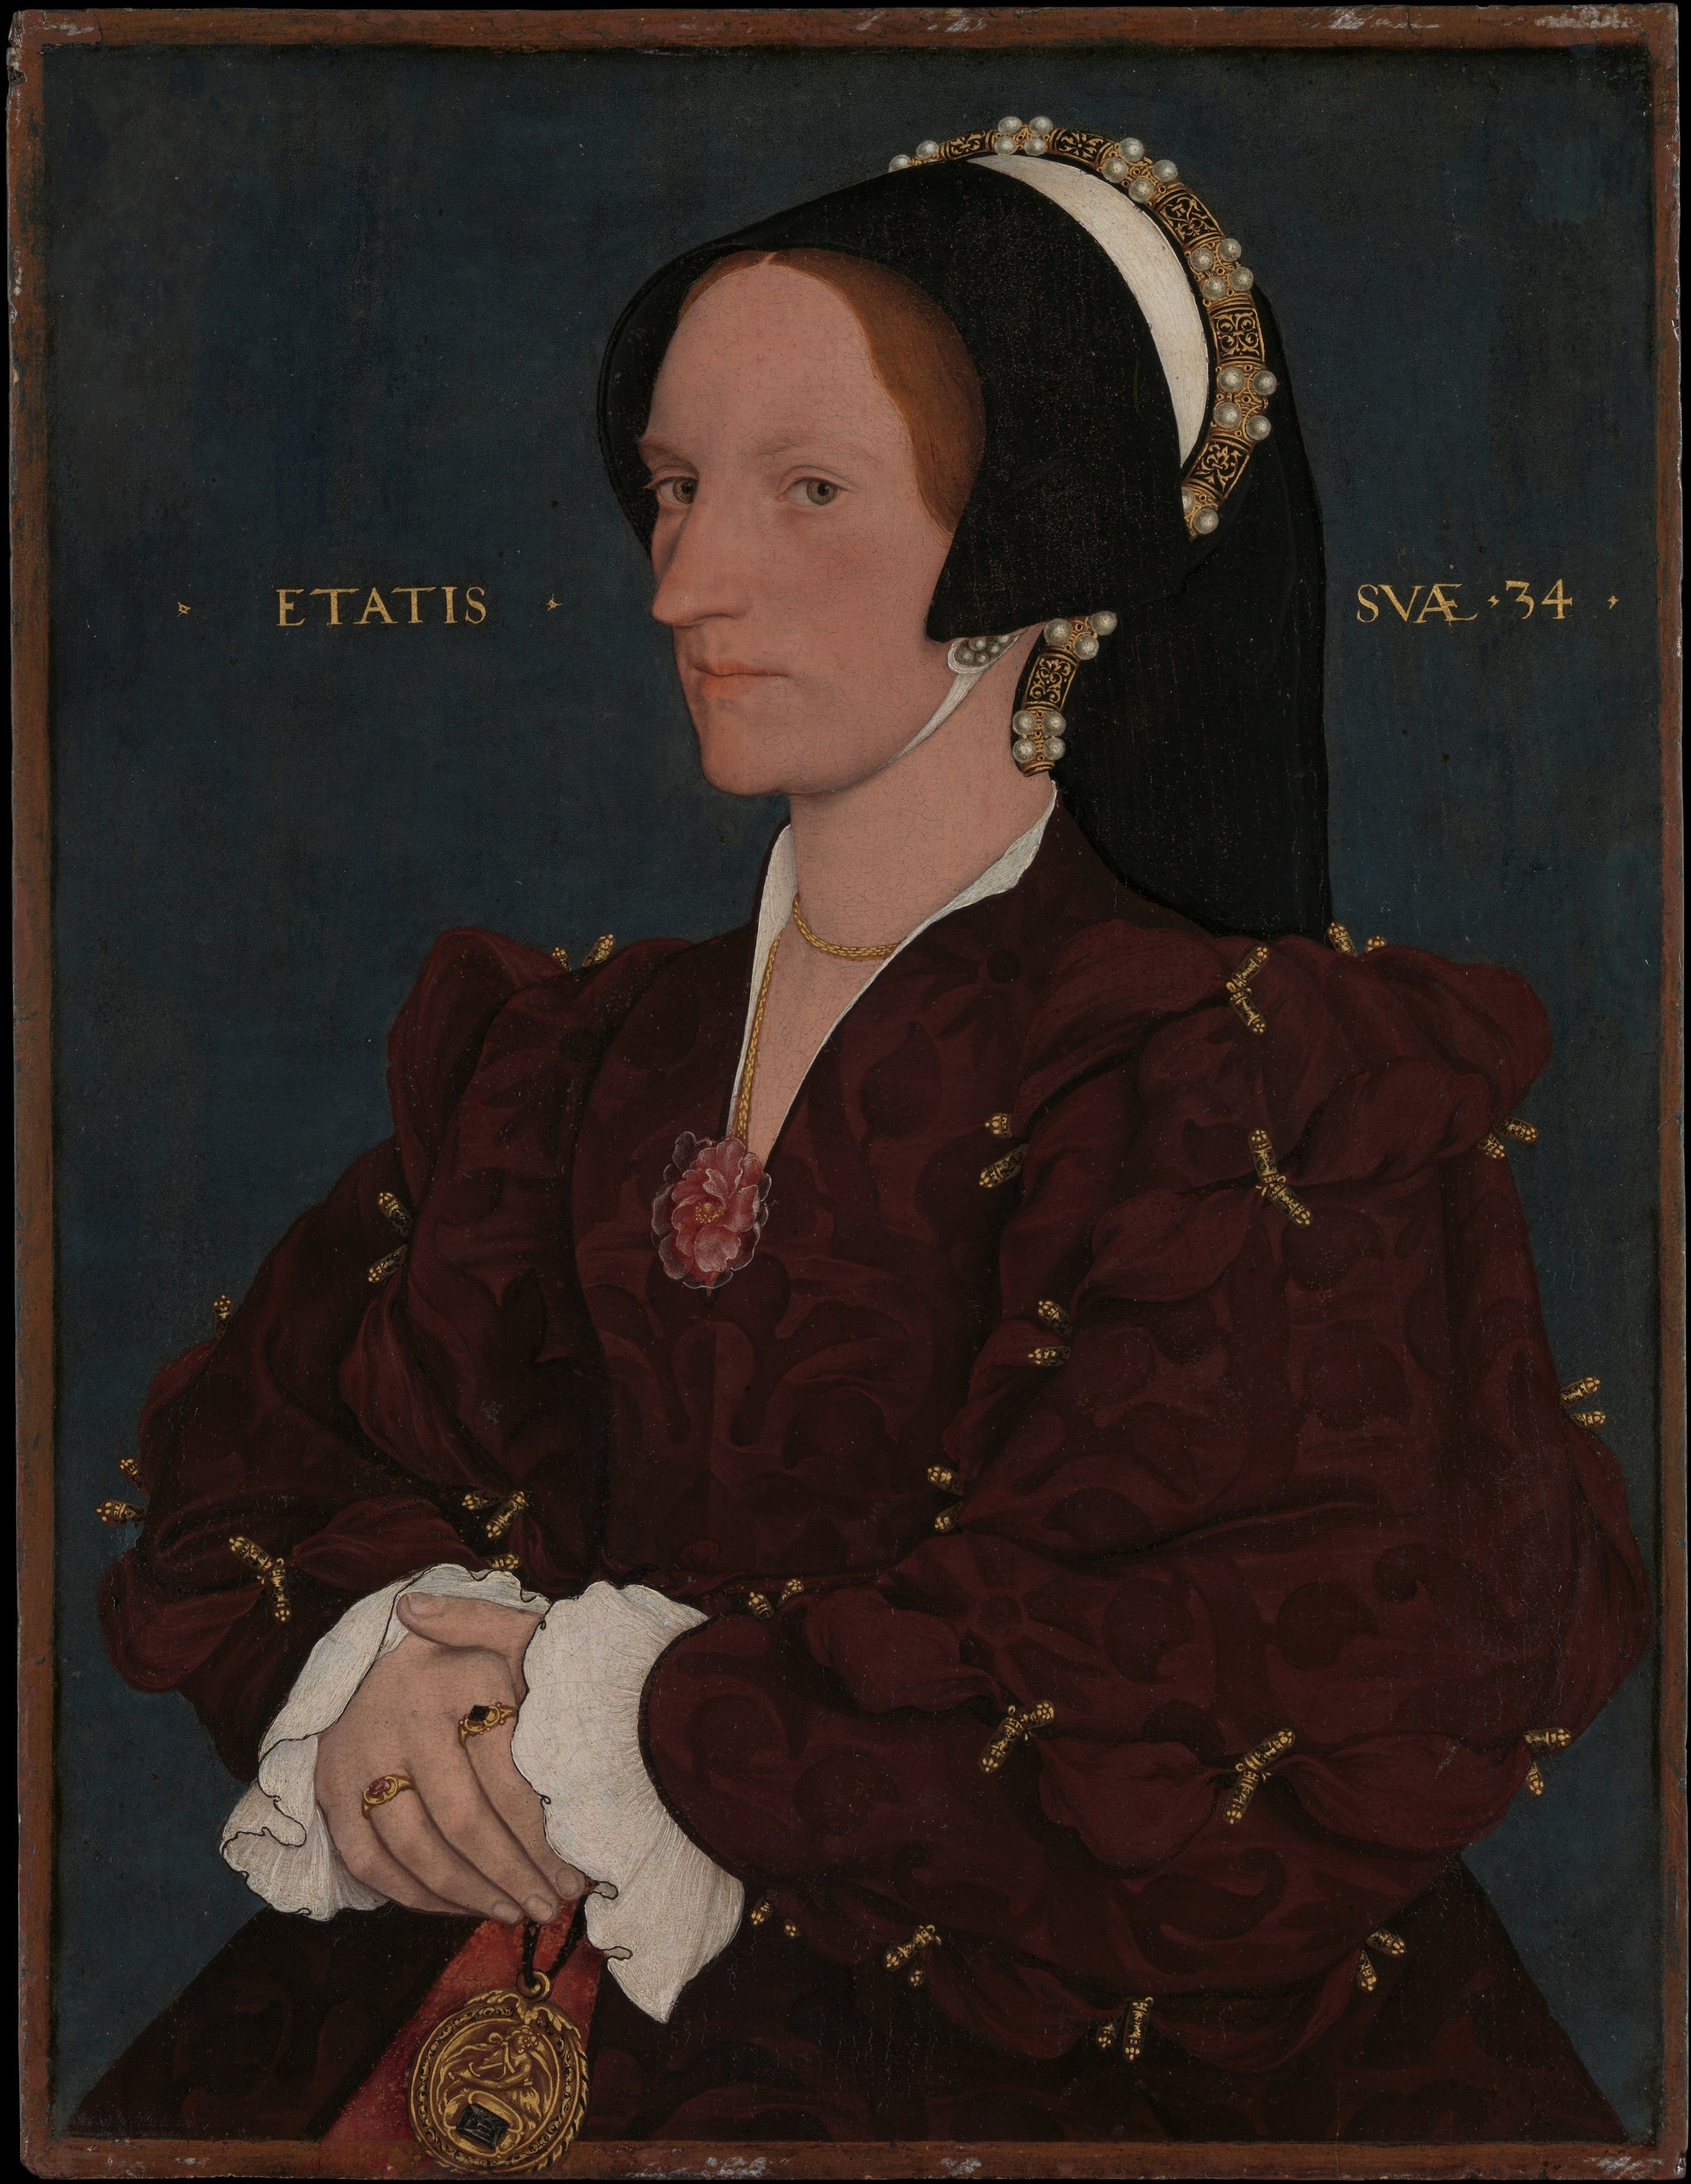 Margaret Wyatt, Lady Lee by Hans Holbein der Jüngere - 1540 - 42,5 x 32,7 cm Metropolitan Museum of Art